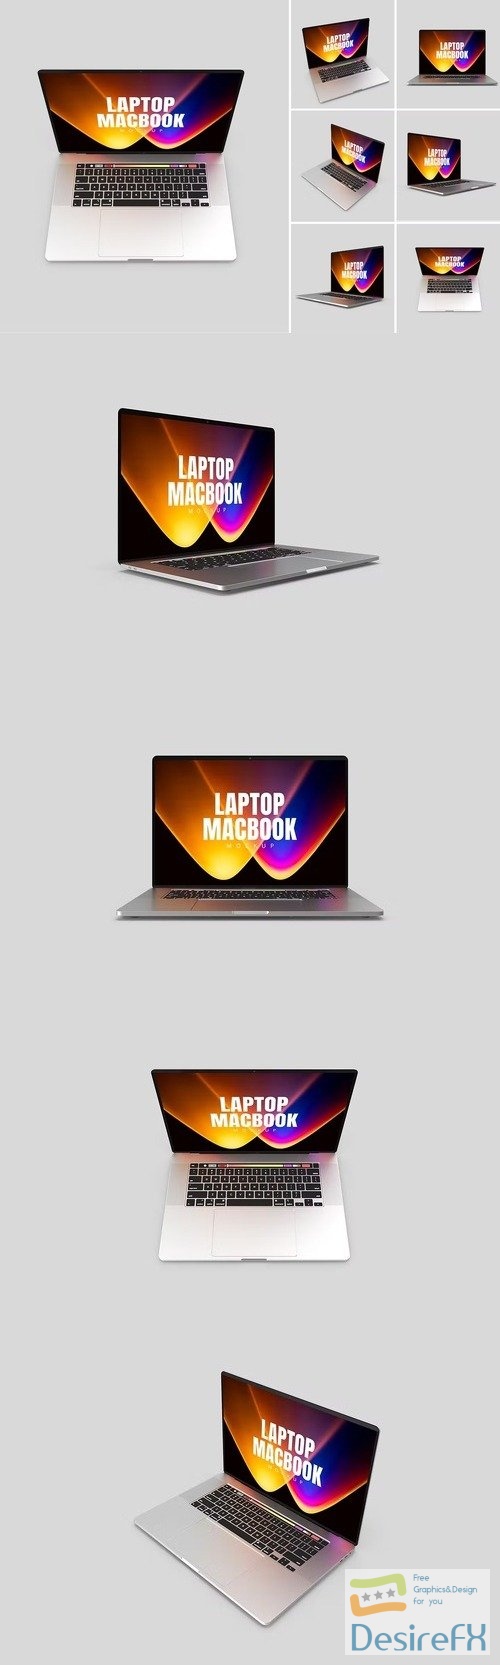 Laptop Macbook Display Web App Mock-Up